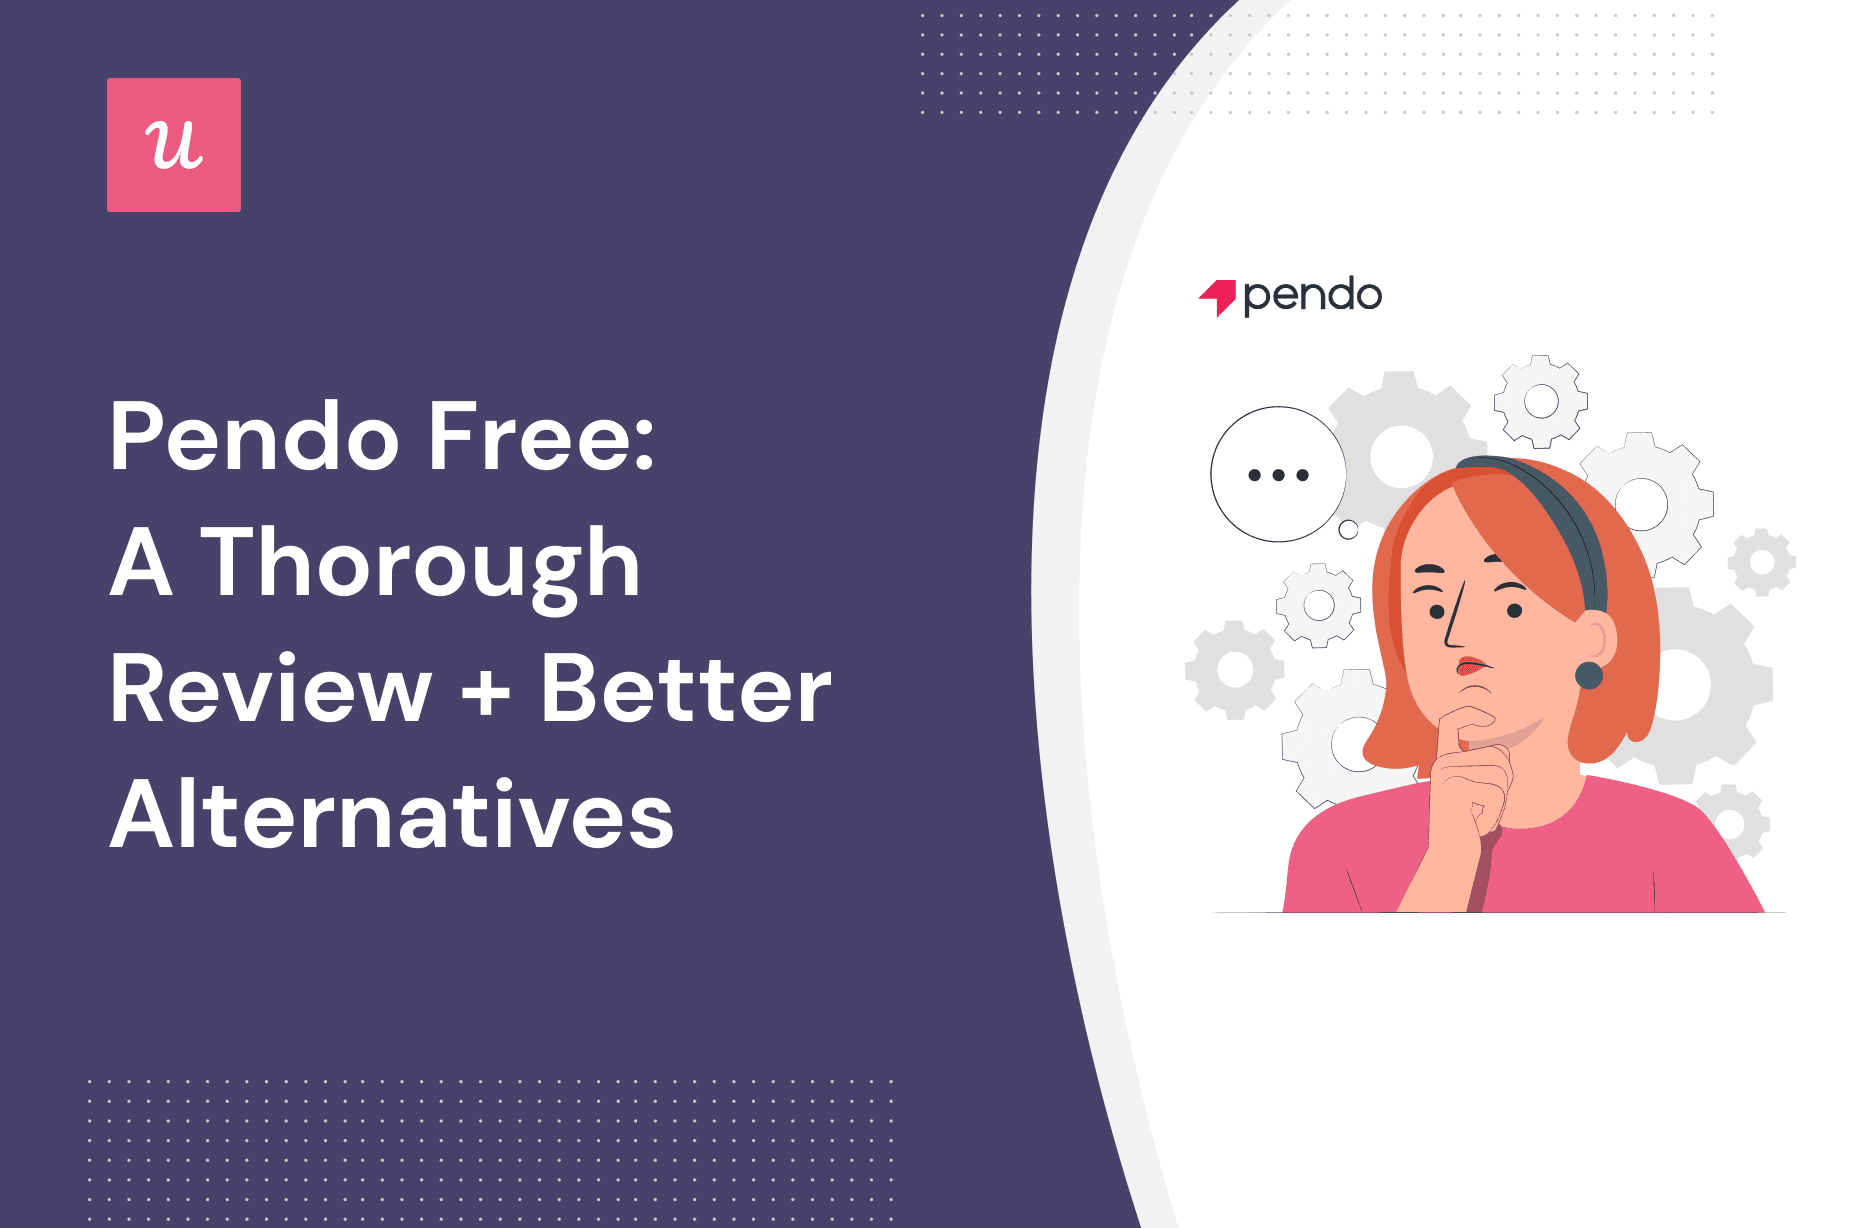 Pendo Free: A Thorough Review + Better Alternatives cover